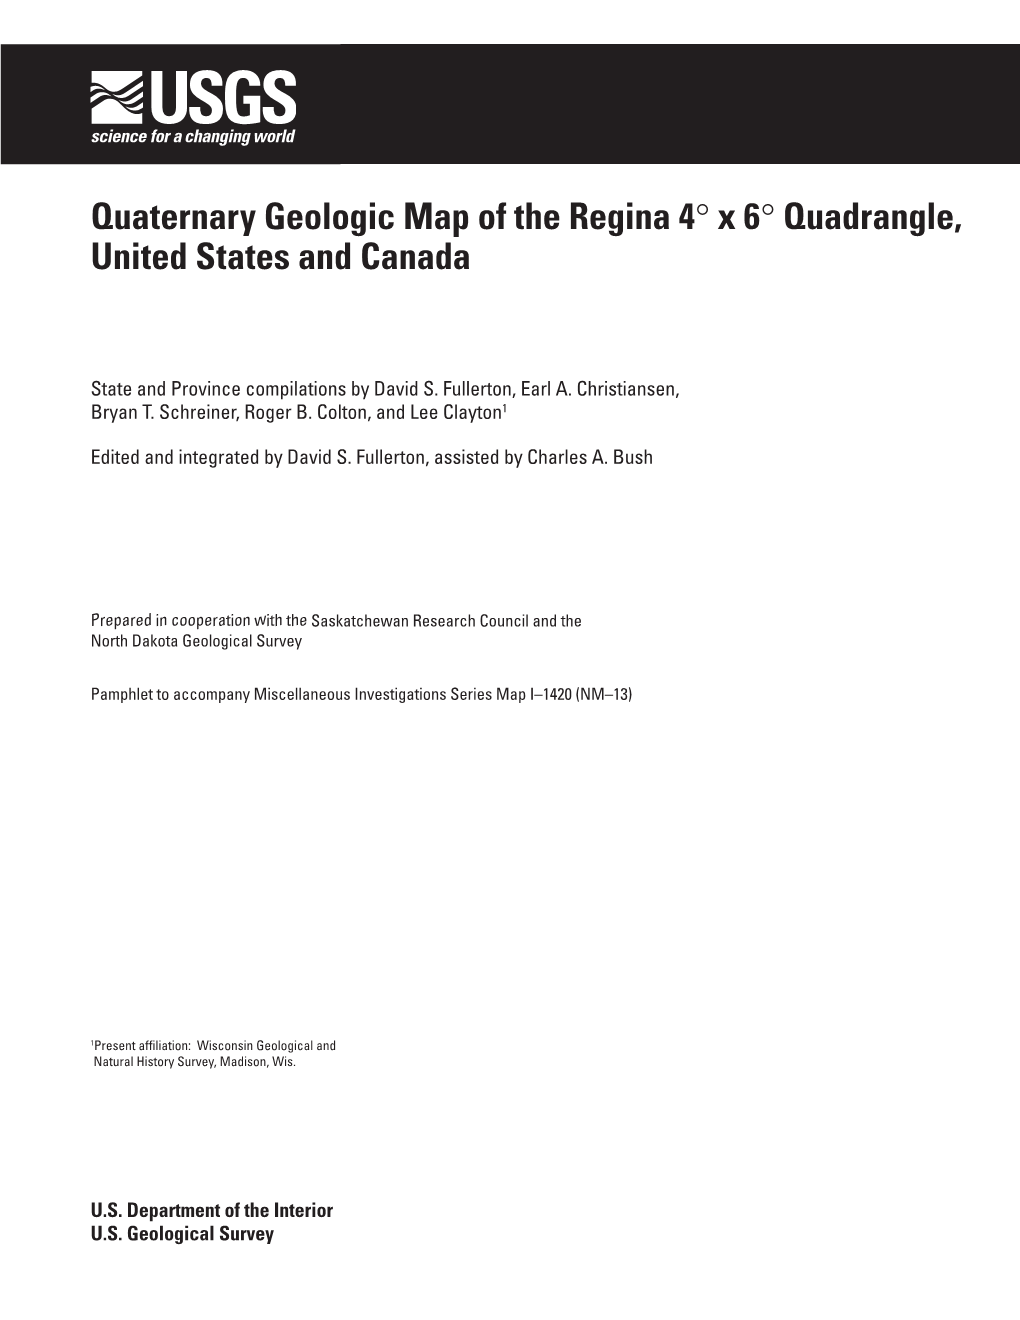 Quaternary Geologic Map of the Regina 4° X 6° Quadrangle, United States and Canada